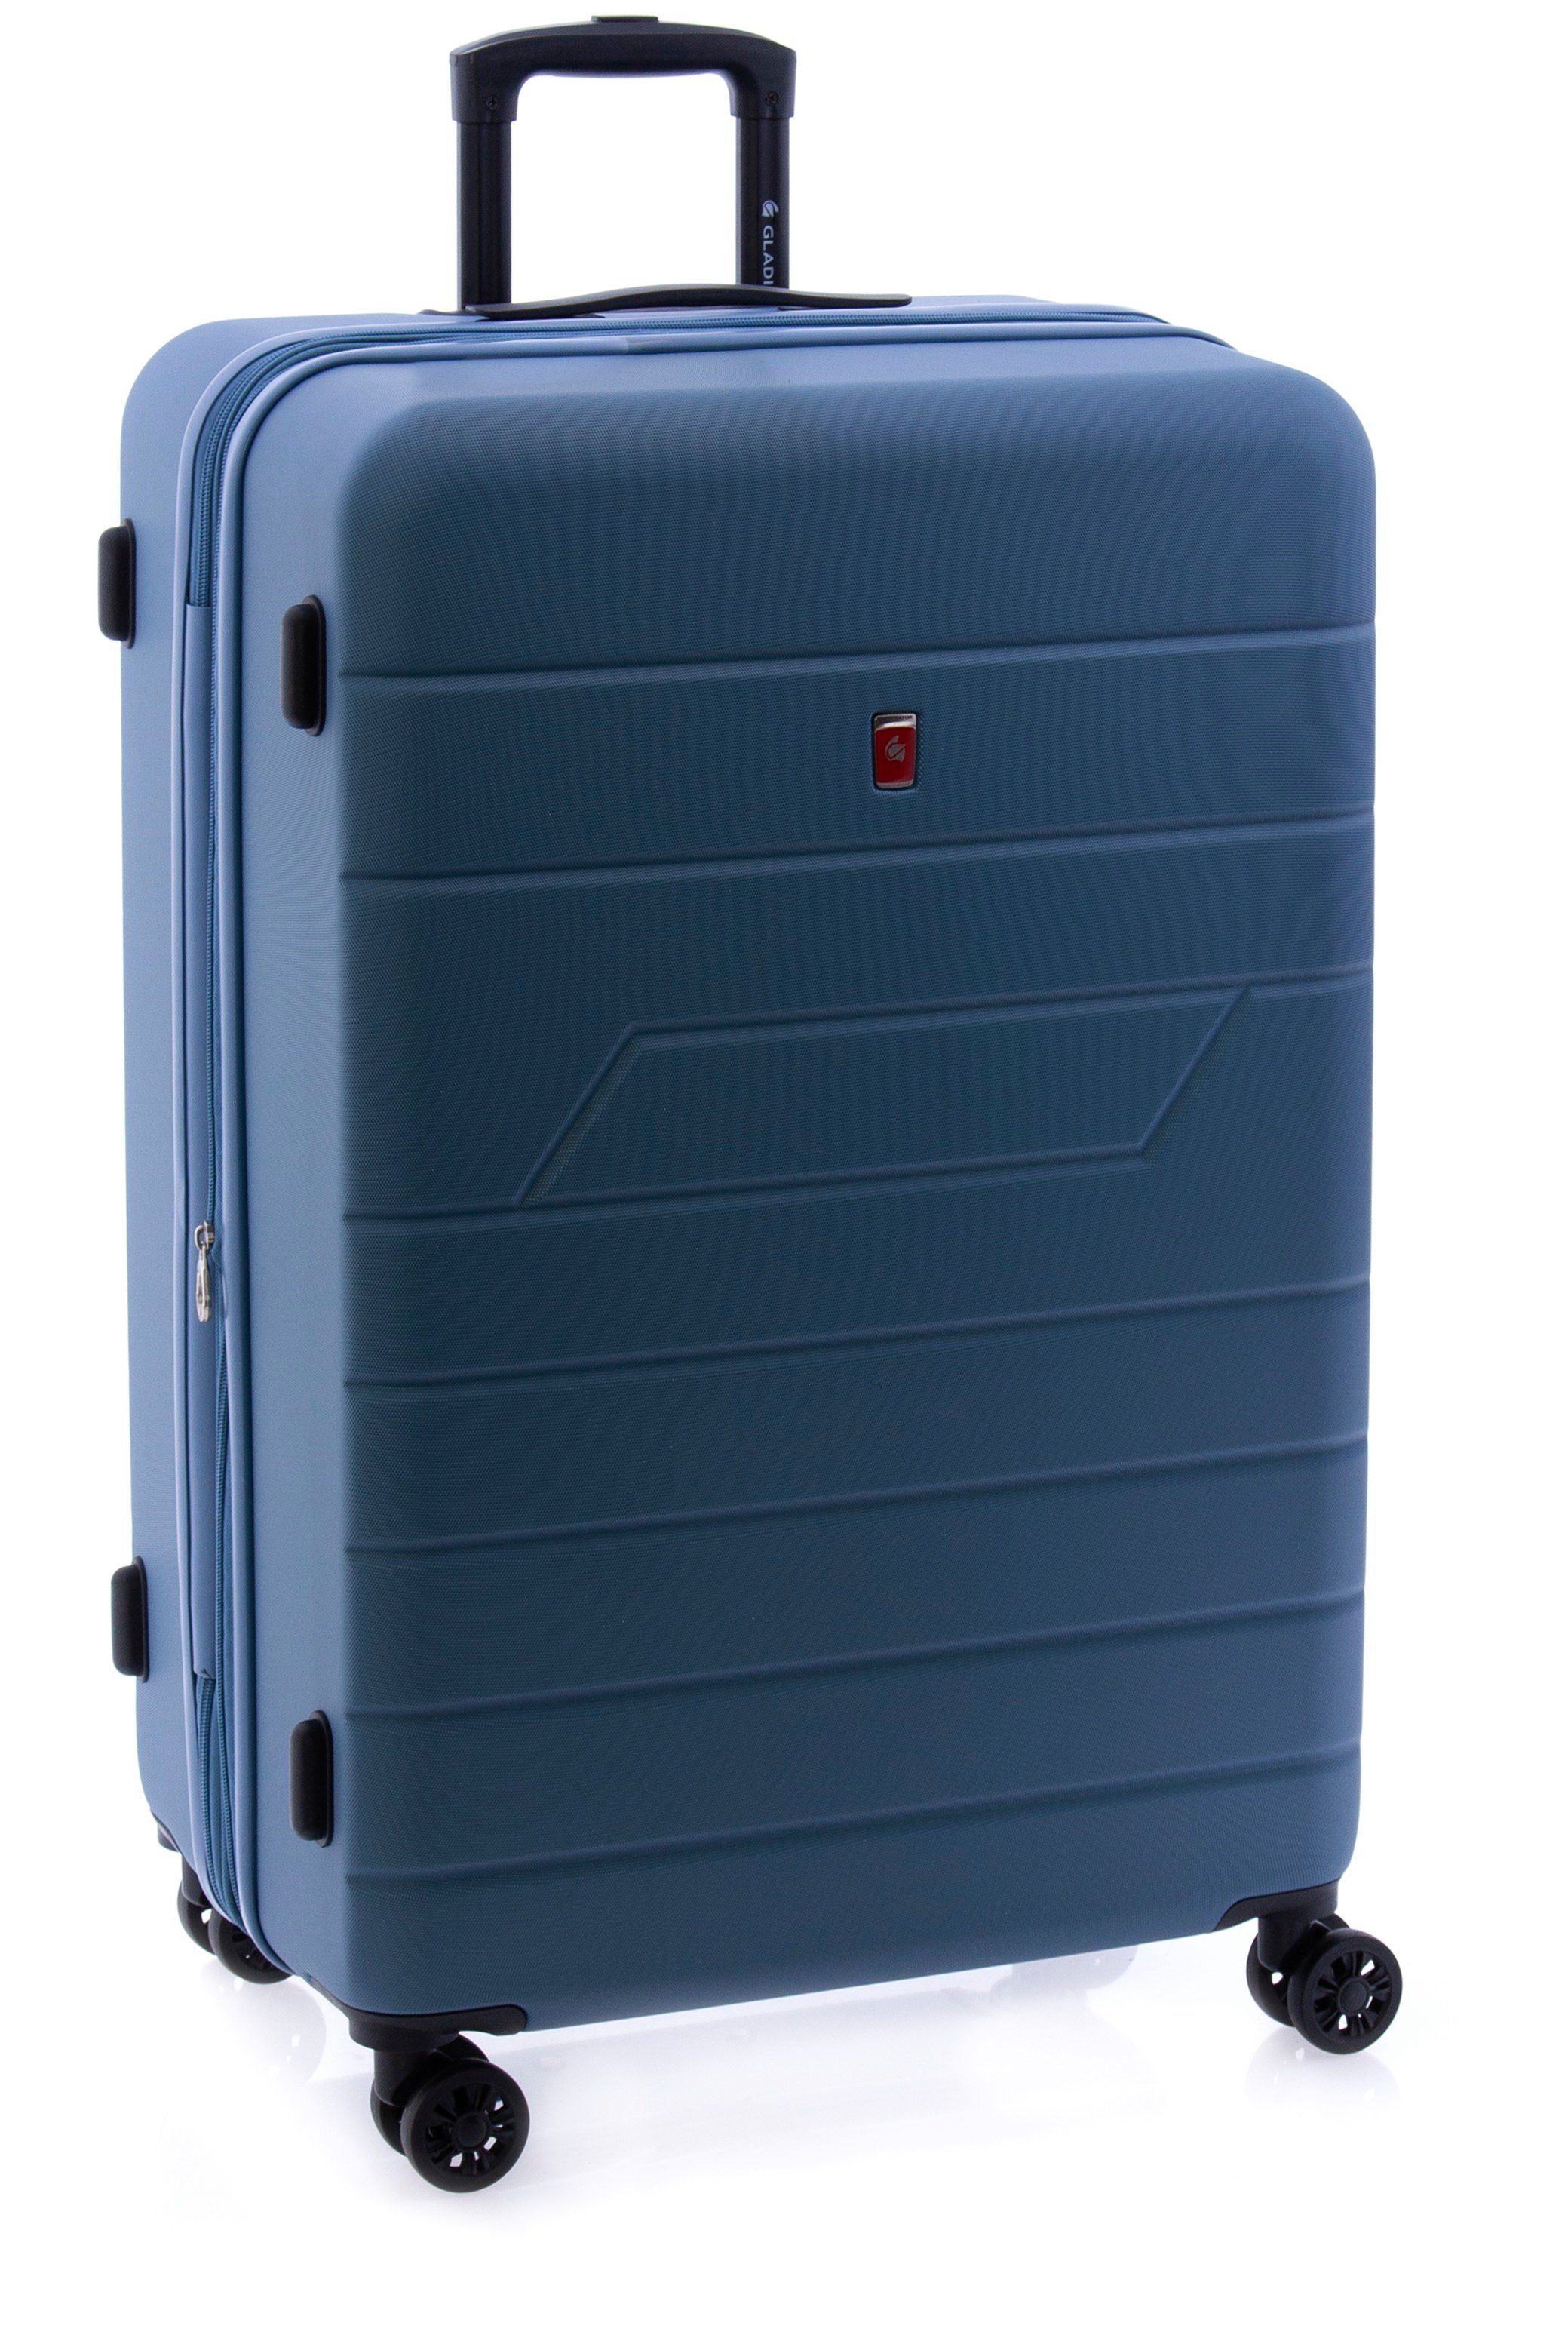 GLADIATOR Hartschalen-Trolley Koffer - schwarz, Farben: Dehnfalte, cm, 75 rot, Doppel-Rollen, grün blau, TSA-Schloss, 4